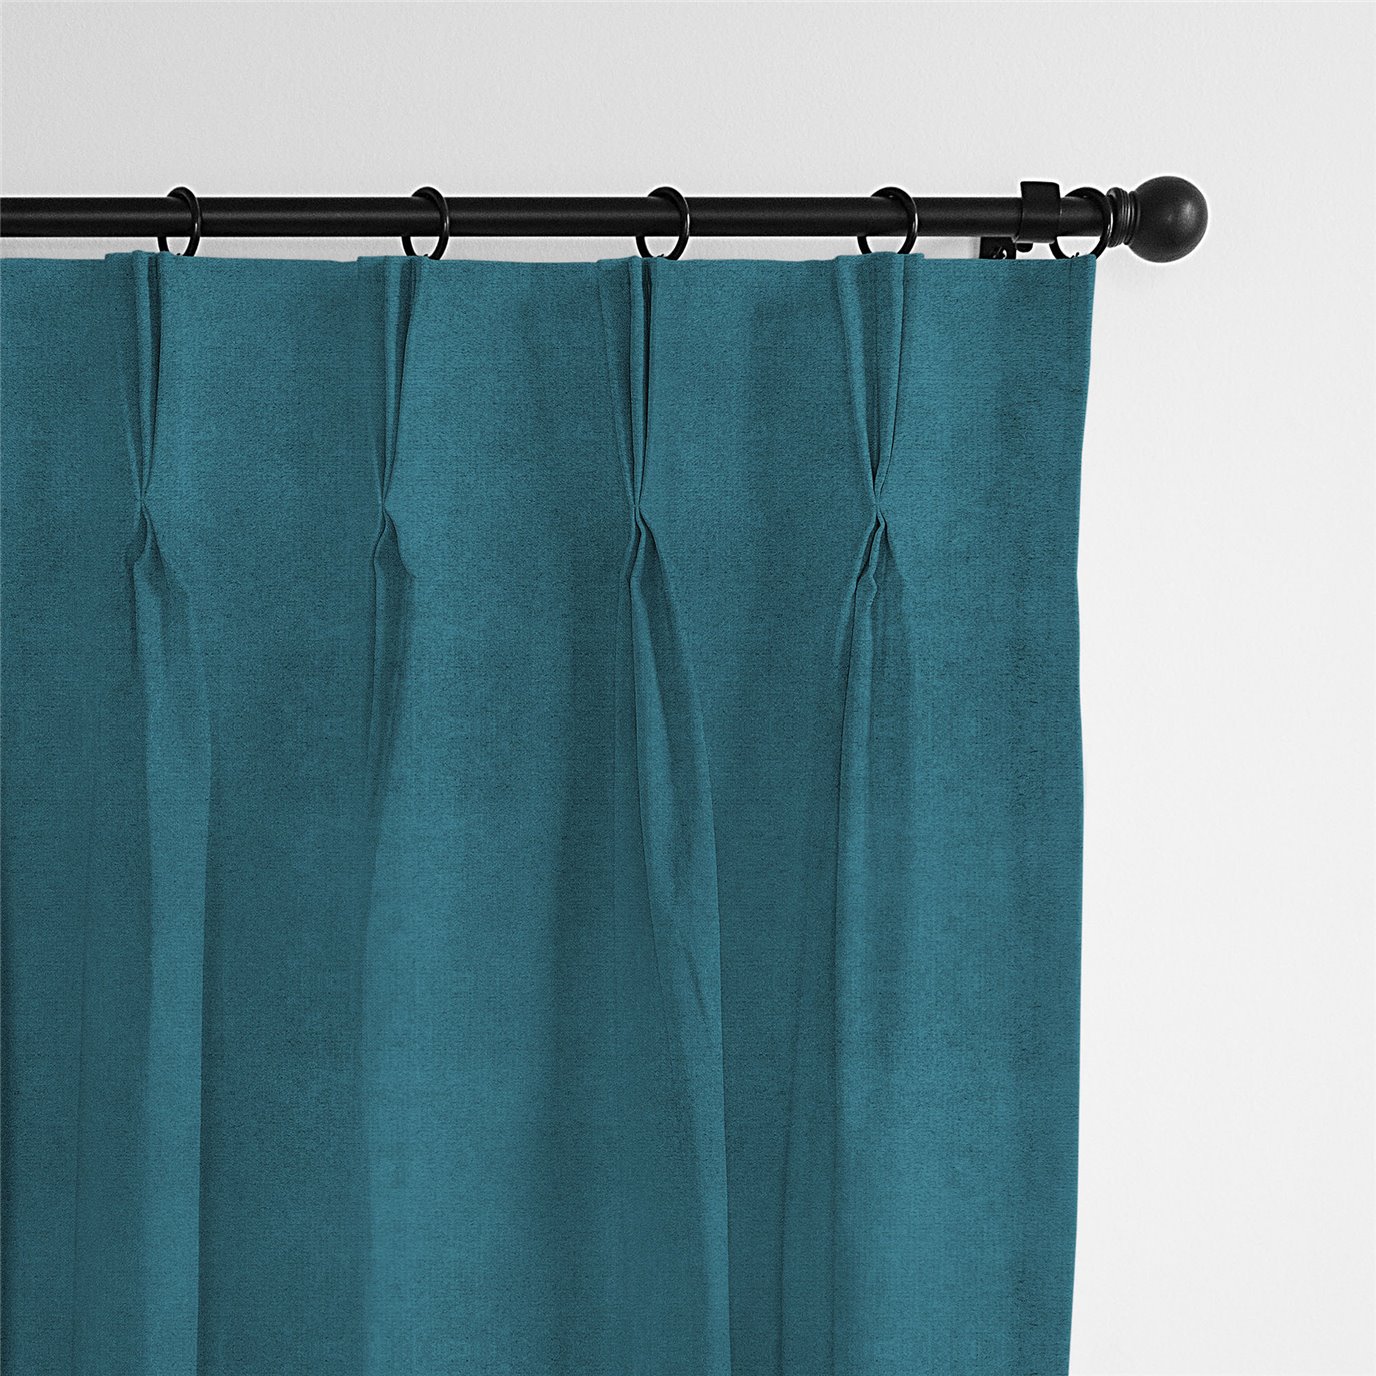 Vanessa Turquoise Pinch Pleat Drapery Panel - Pair - Size 40"x144"